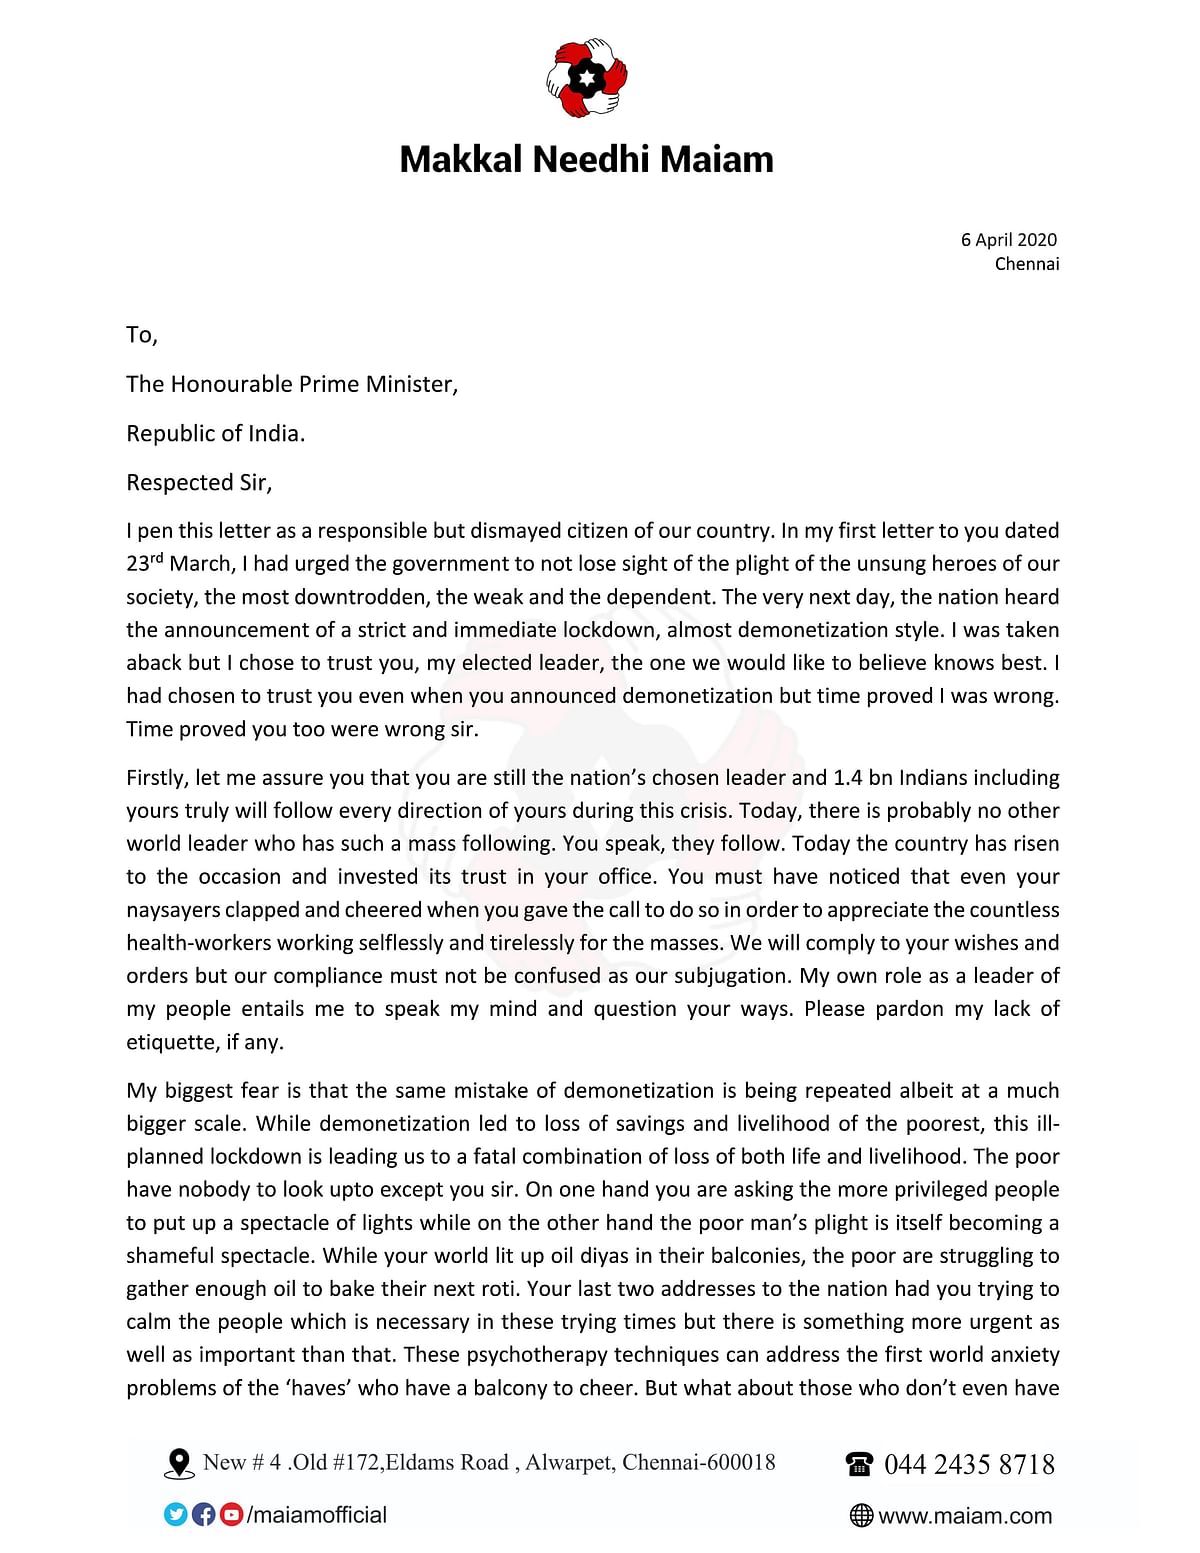 Kamal Haasan’s open letter to Prime Minister Narendra Modi.